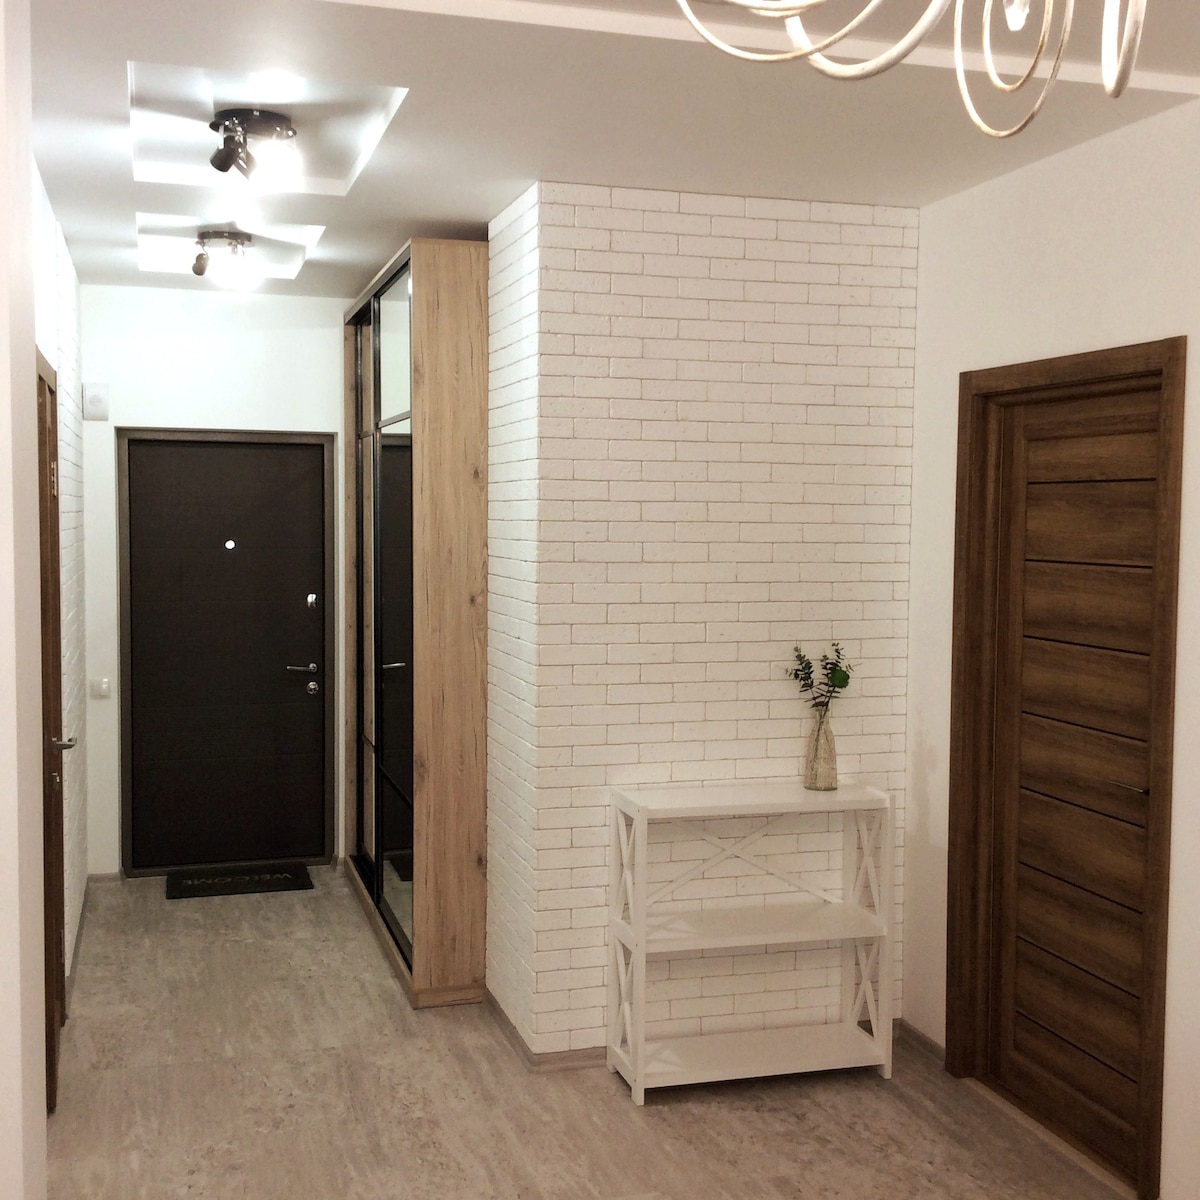 West street LUX Apartmets-105, NEW 2019